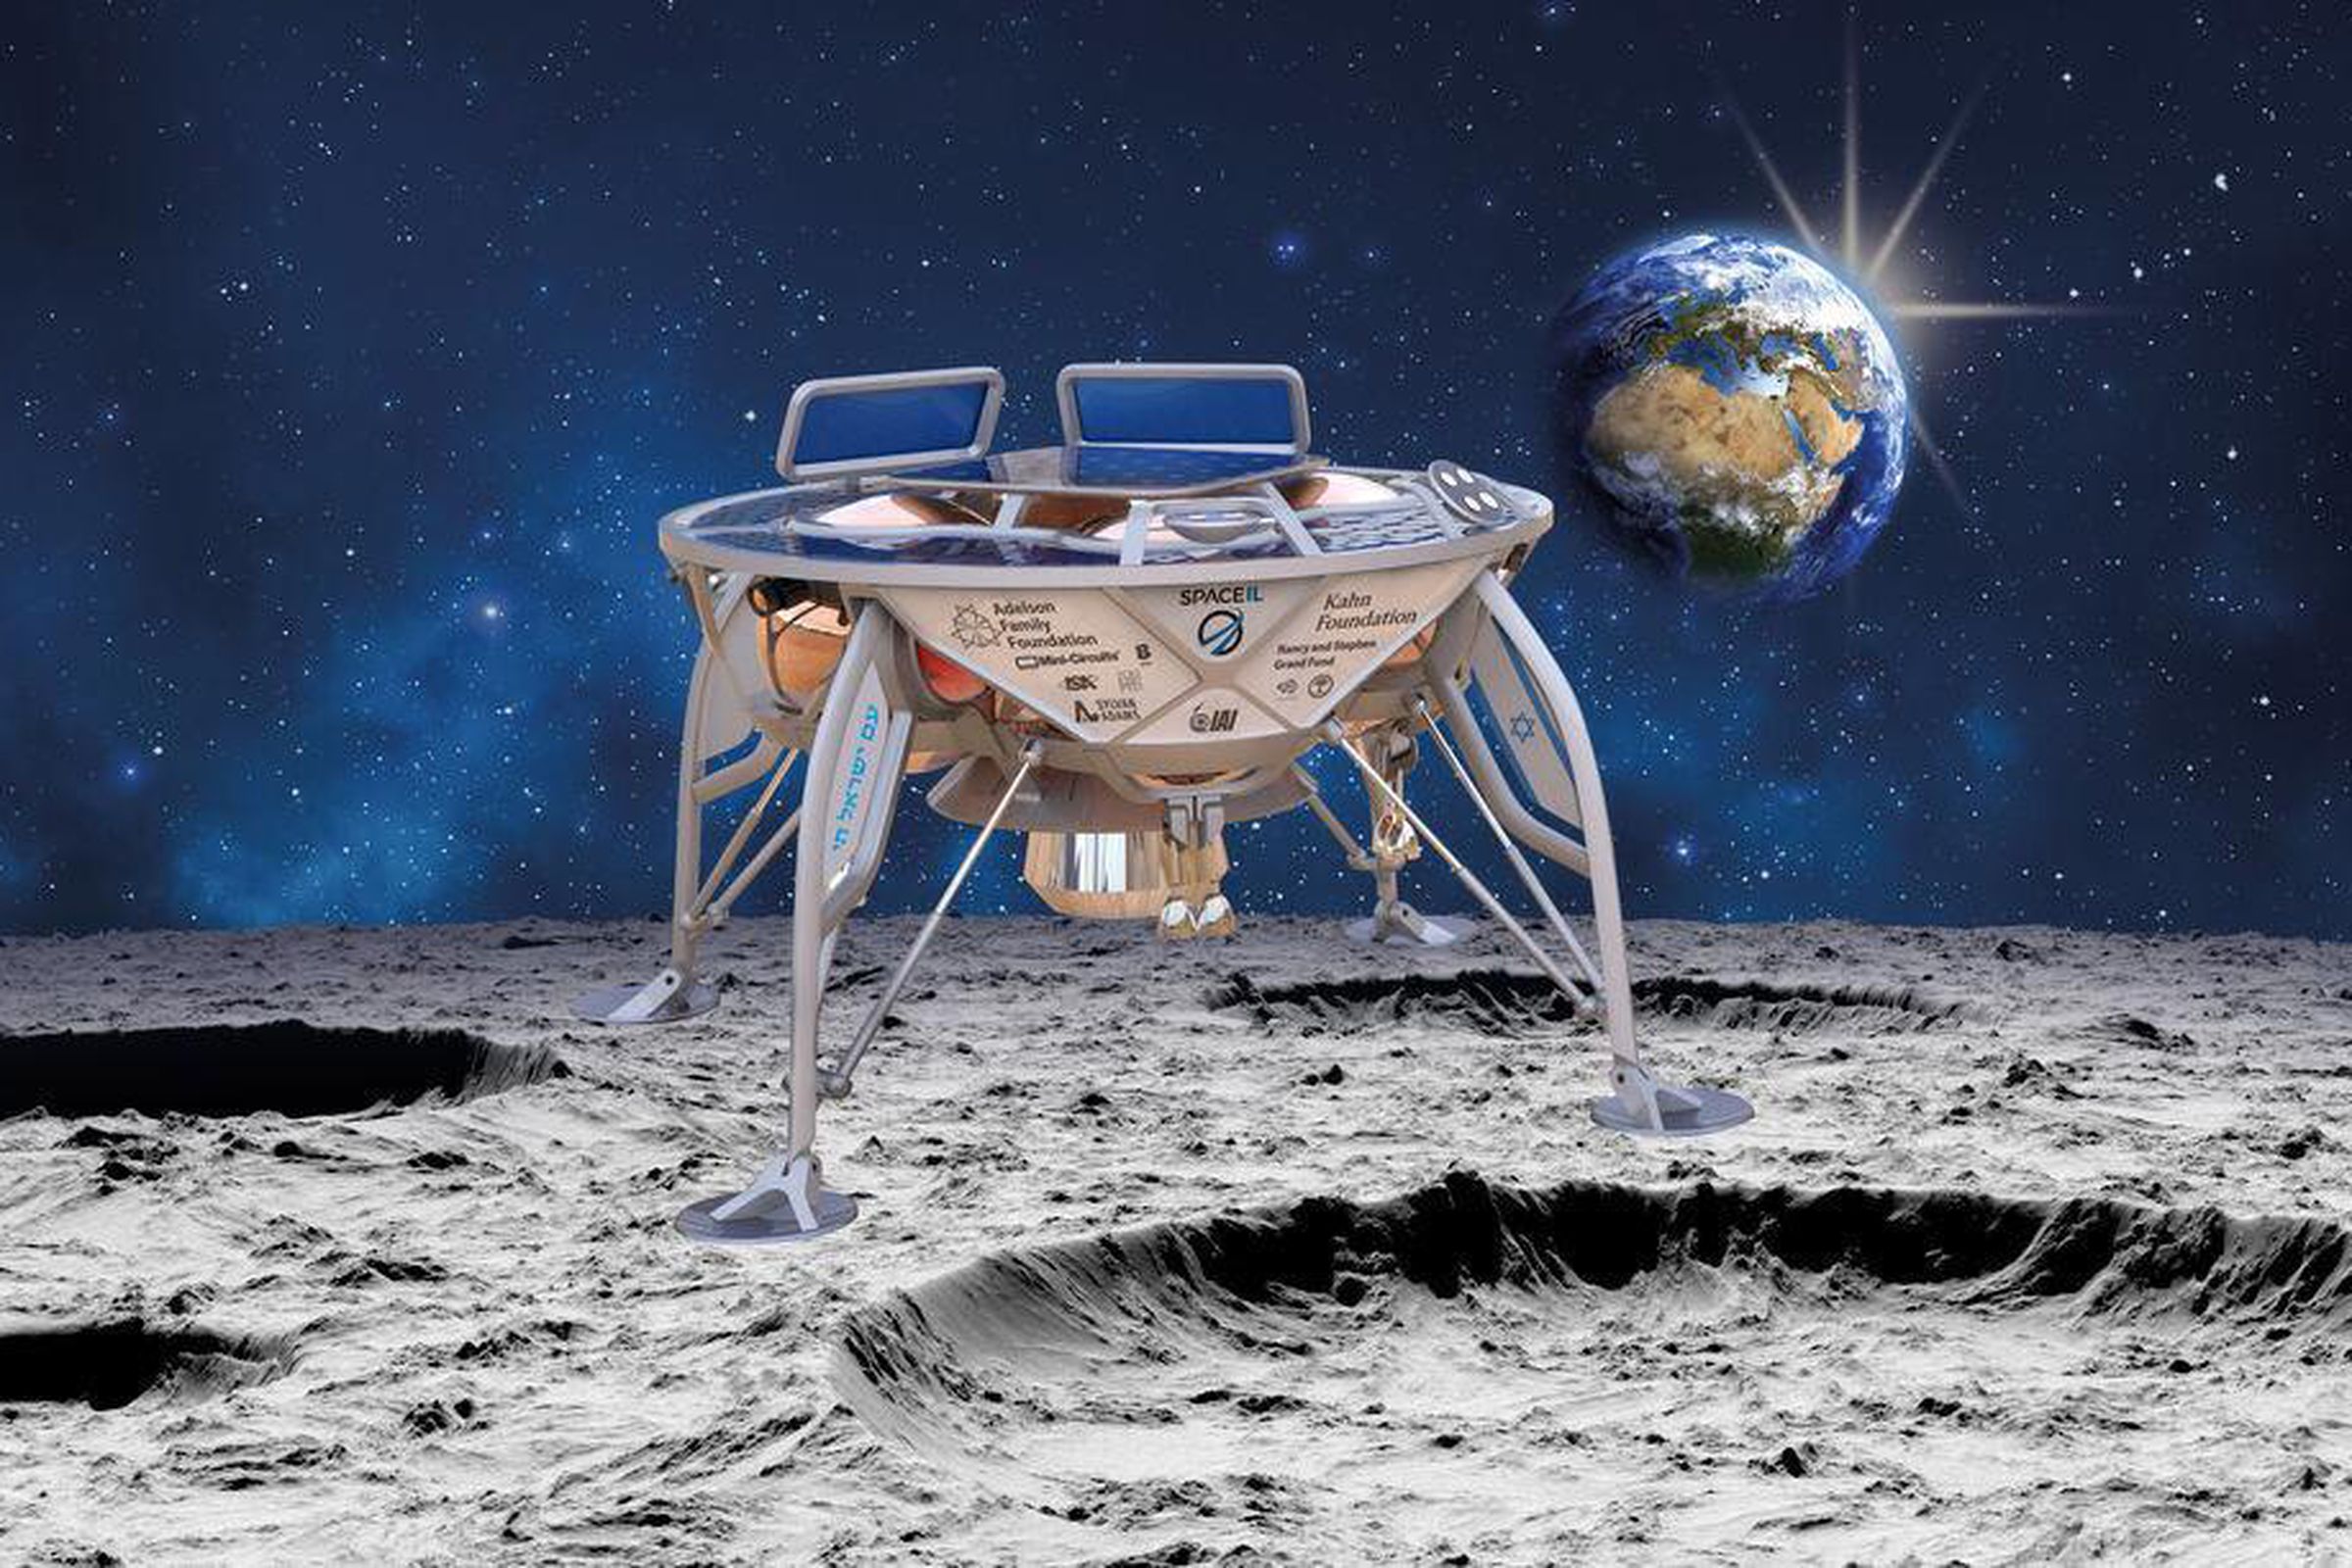 An artistic rendering of the Beresheet lander on the Moon.